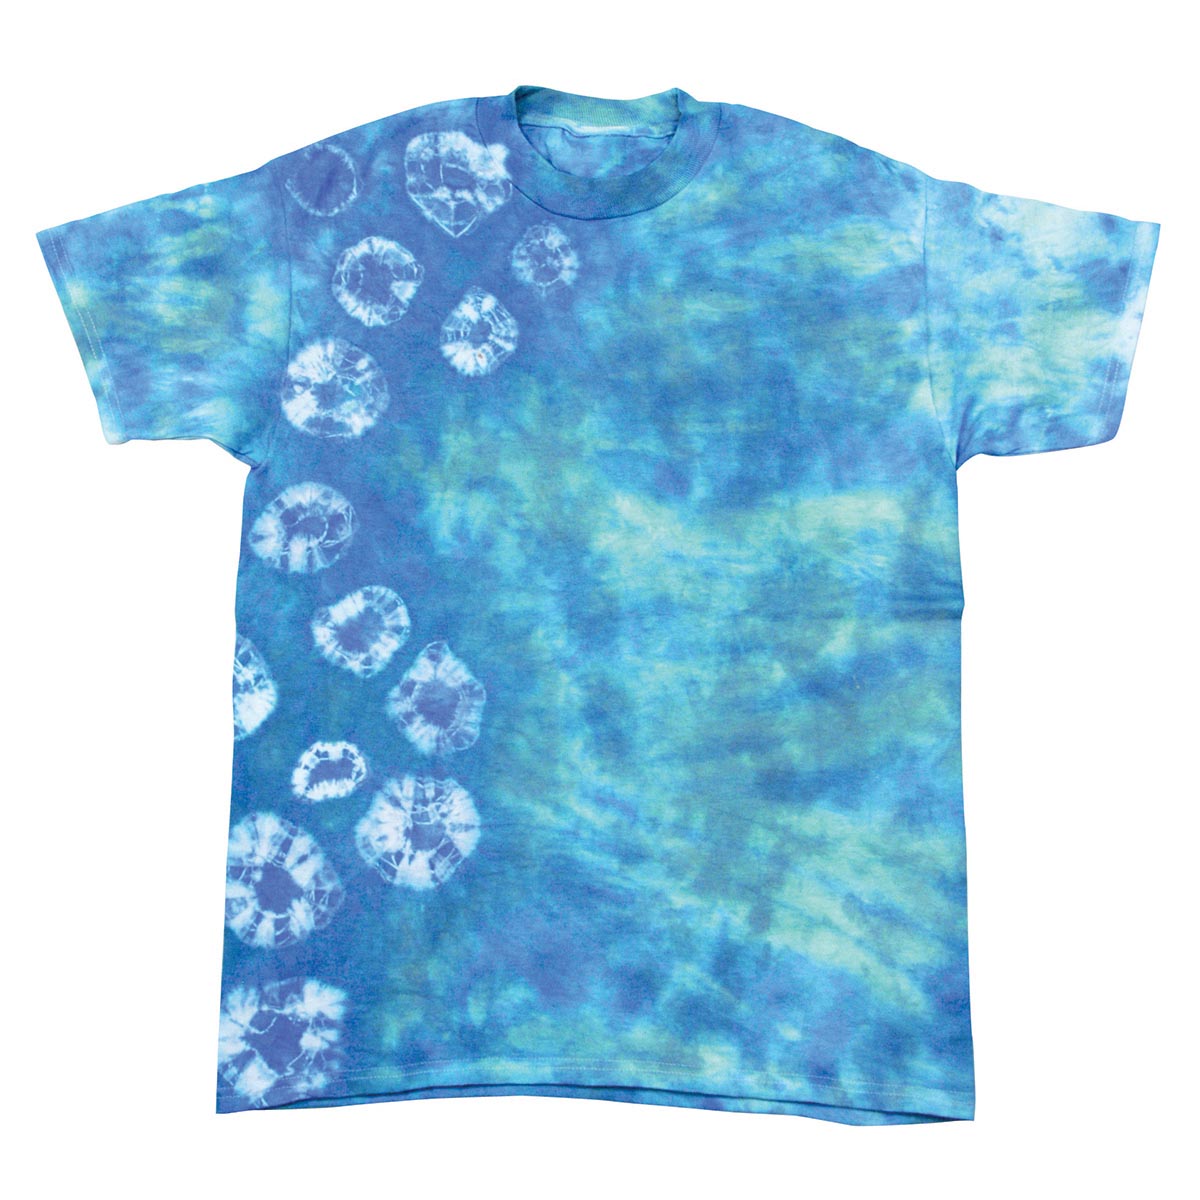 Jacquard-Batik-Kit für T-Shirts - Sapphire Jewel Tone